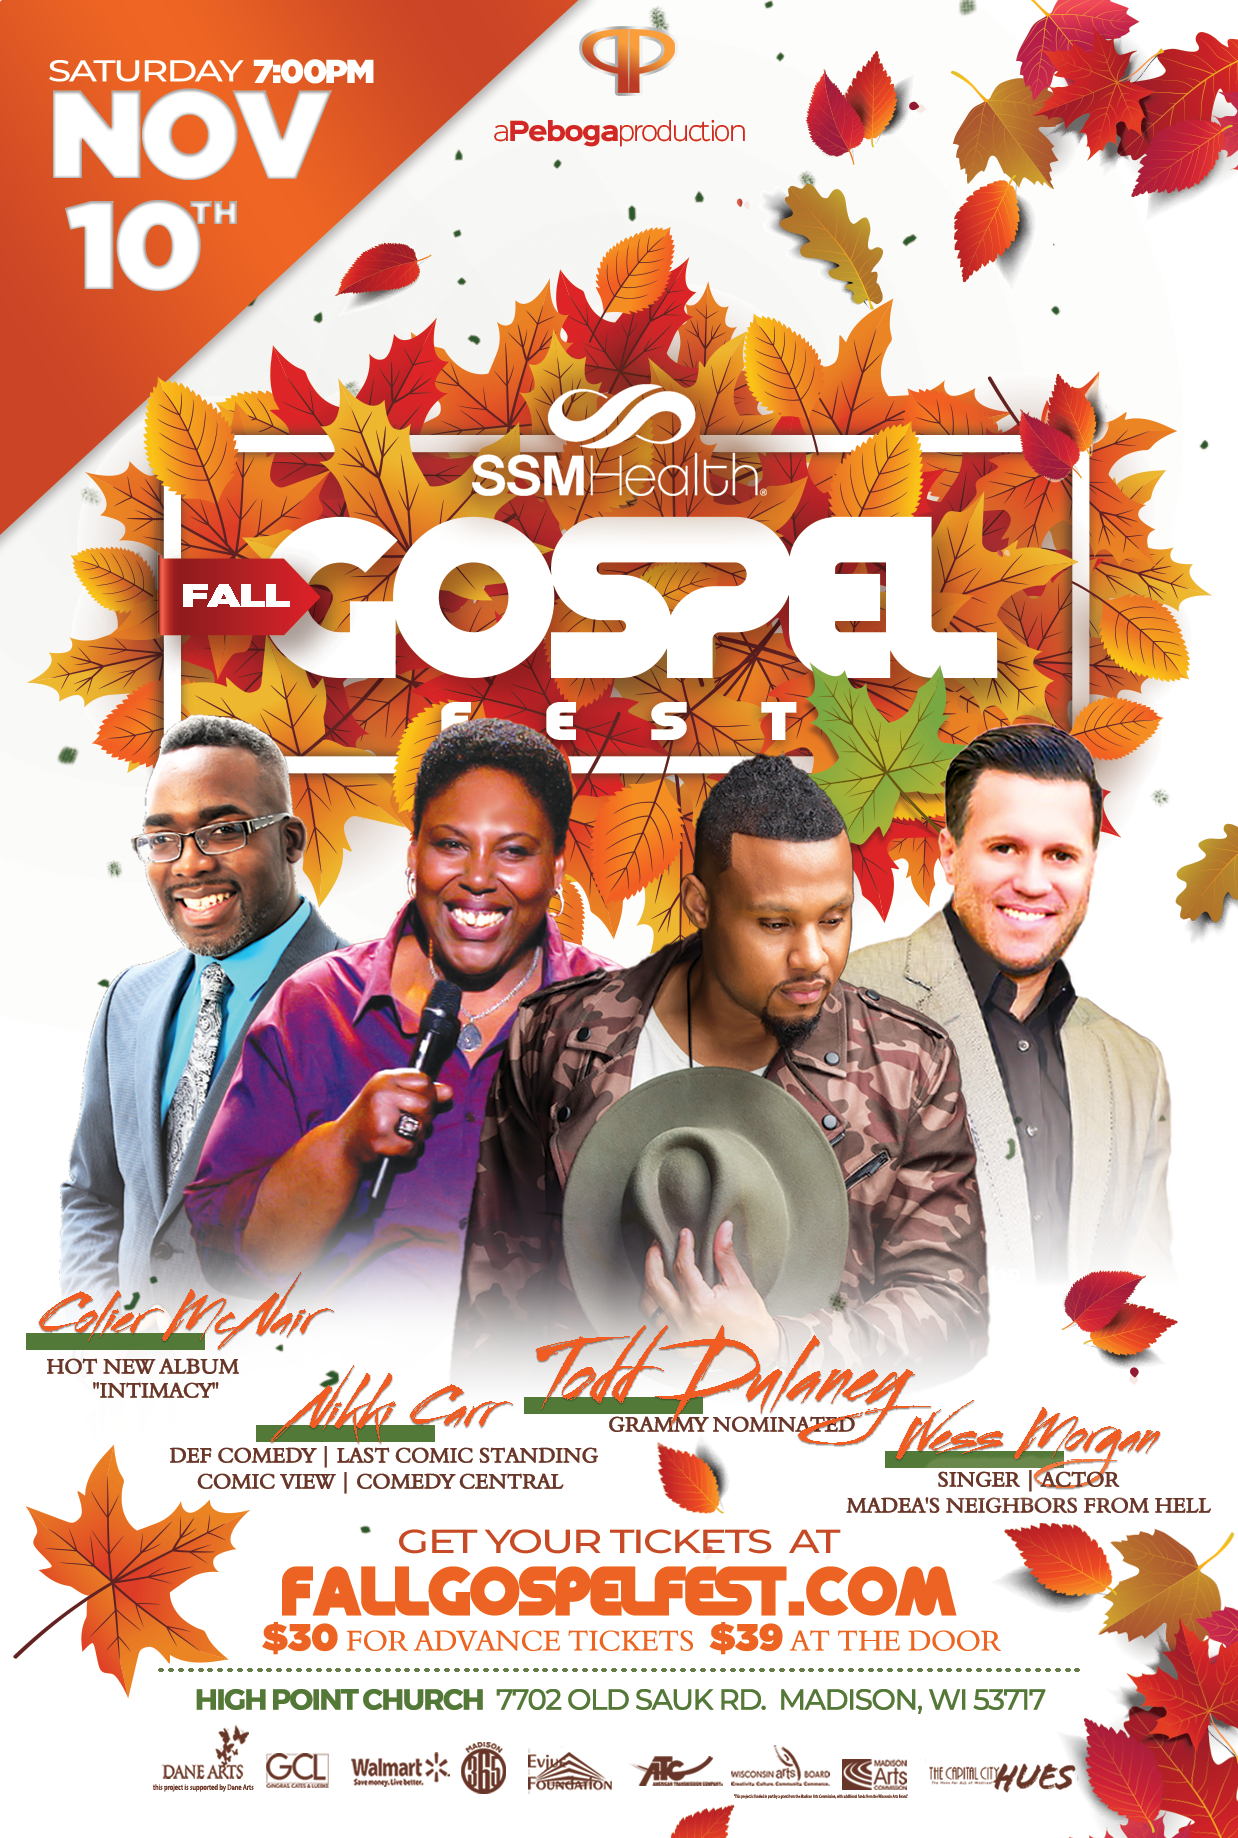 SSM Health Fall Gospel Fest